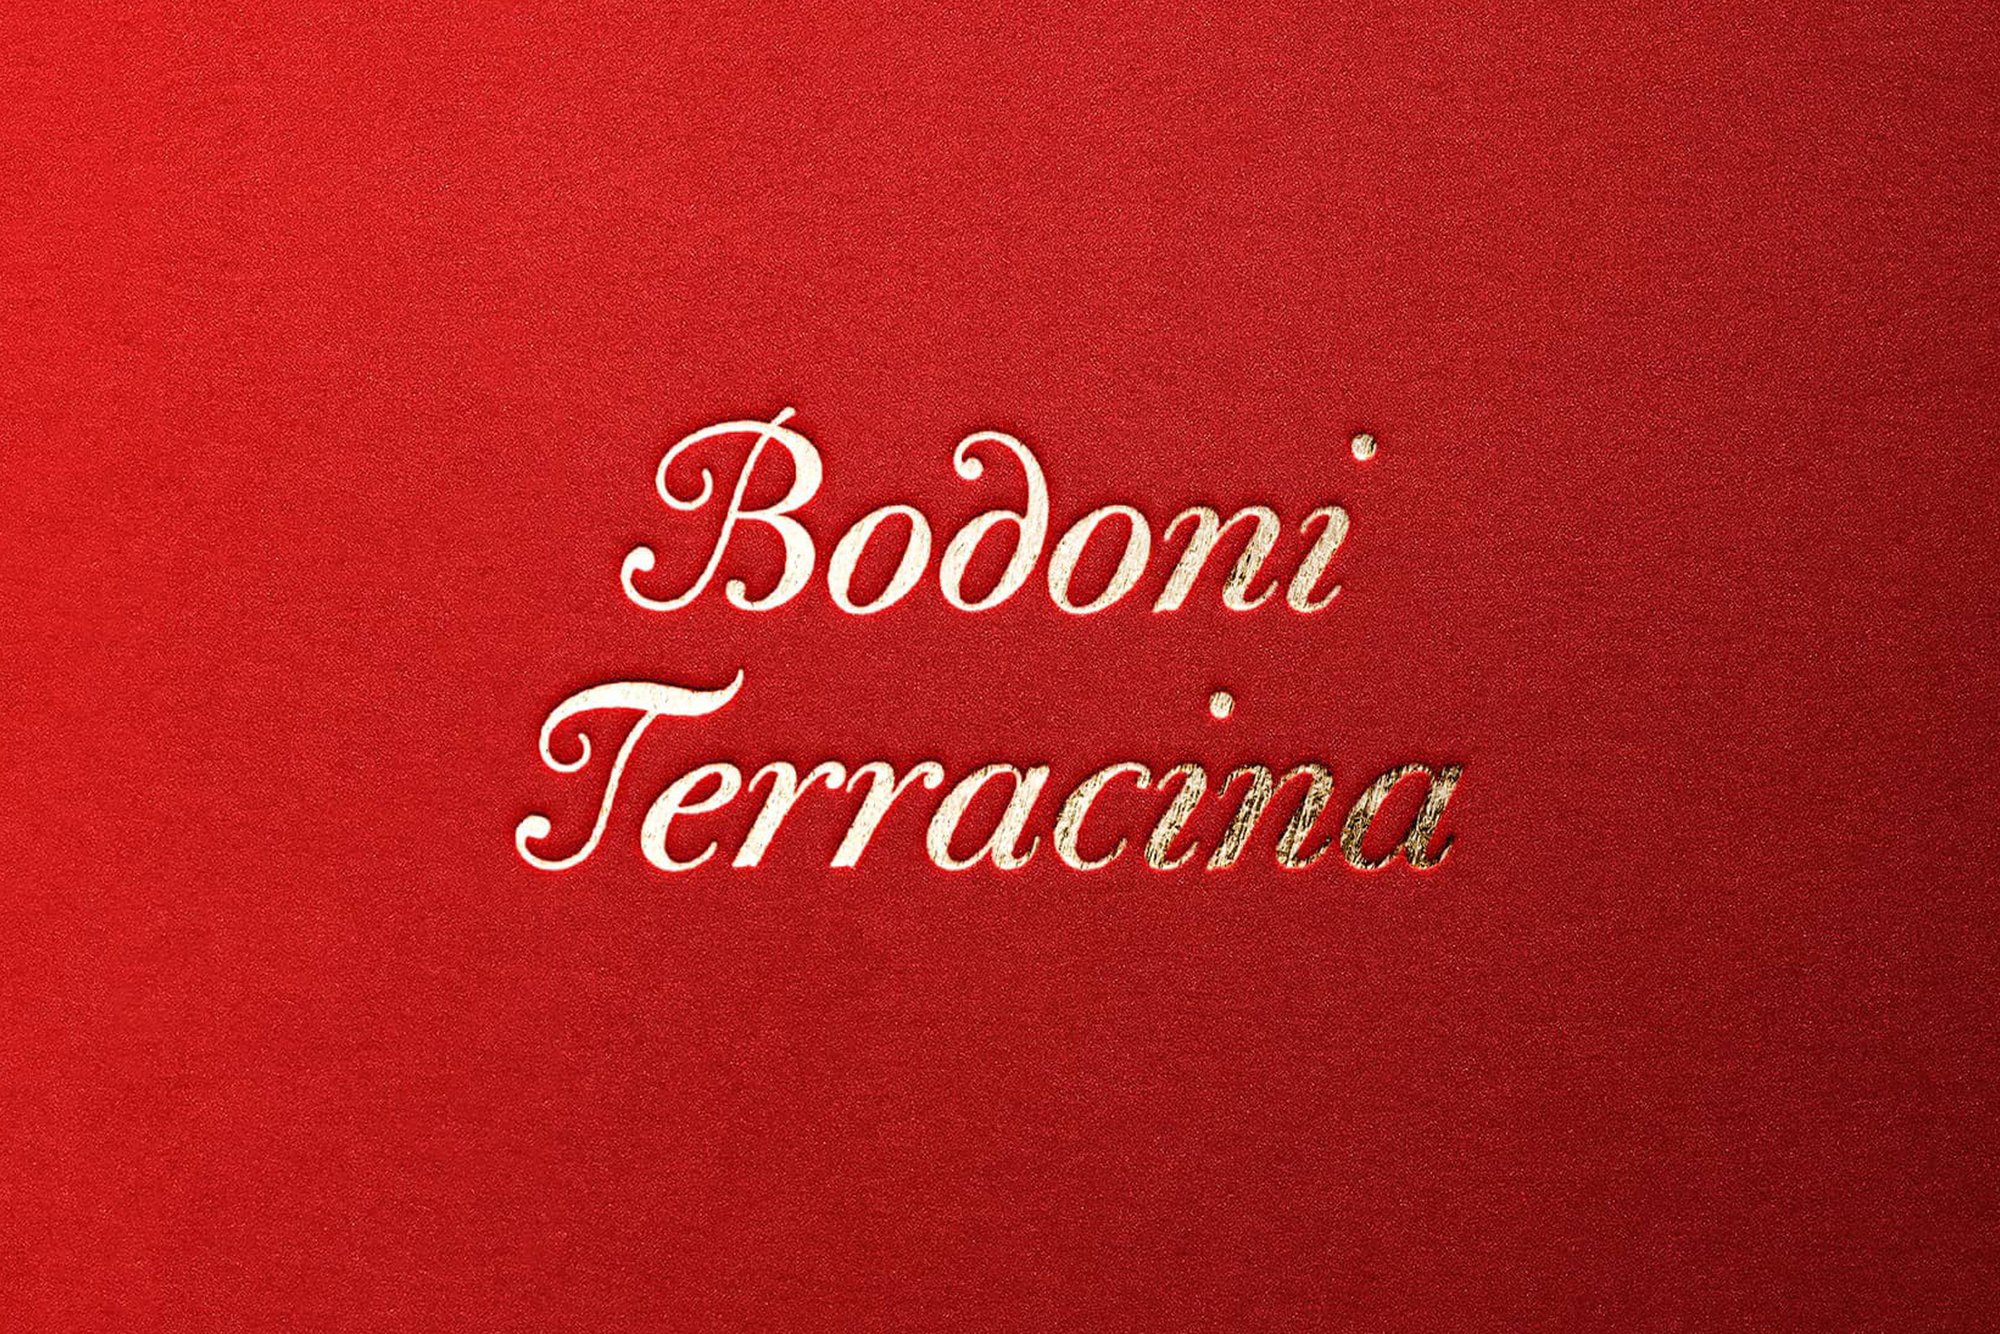 Bodoni Terracina Full Family 6 Fonts cover image.